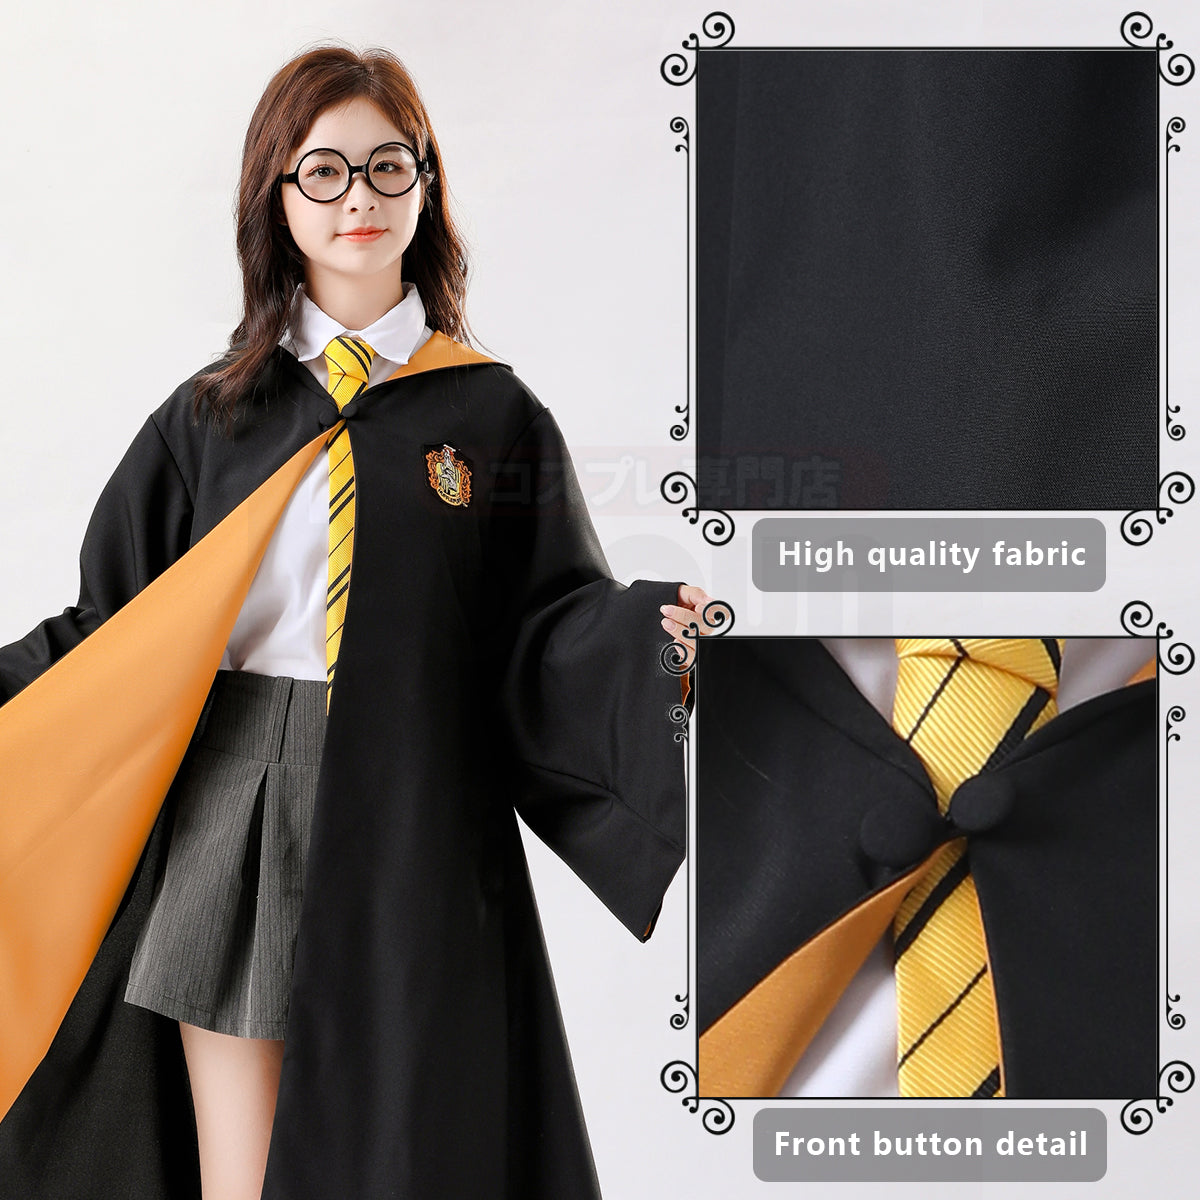 HOLOUN Harry Anime Cosplay Costume Yellow Robe Cloak Cape Halloween